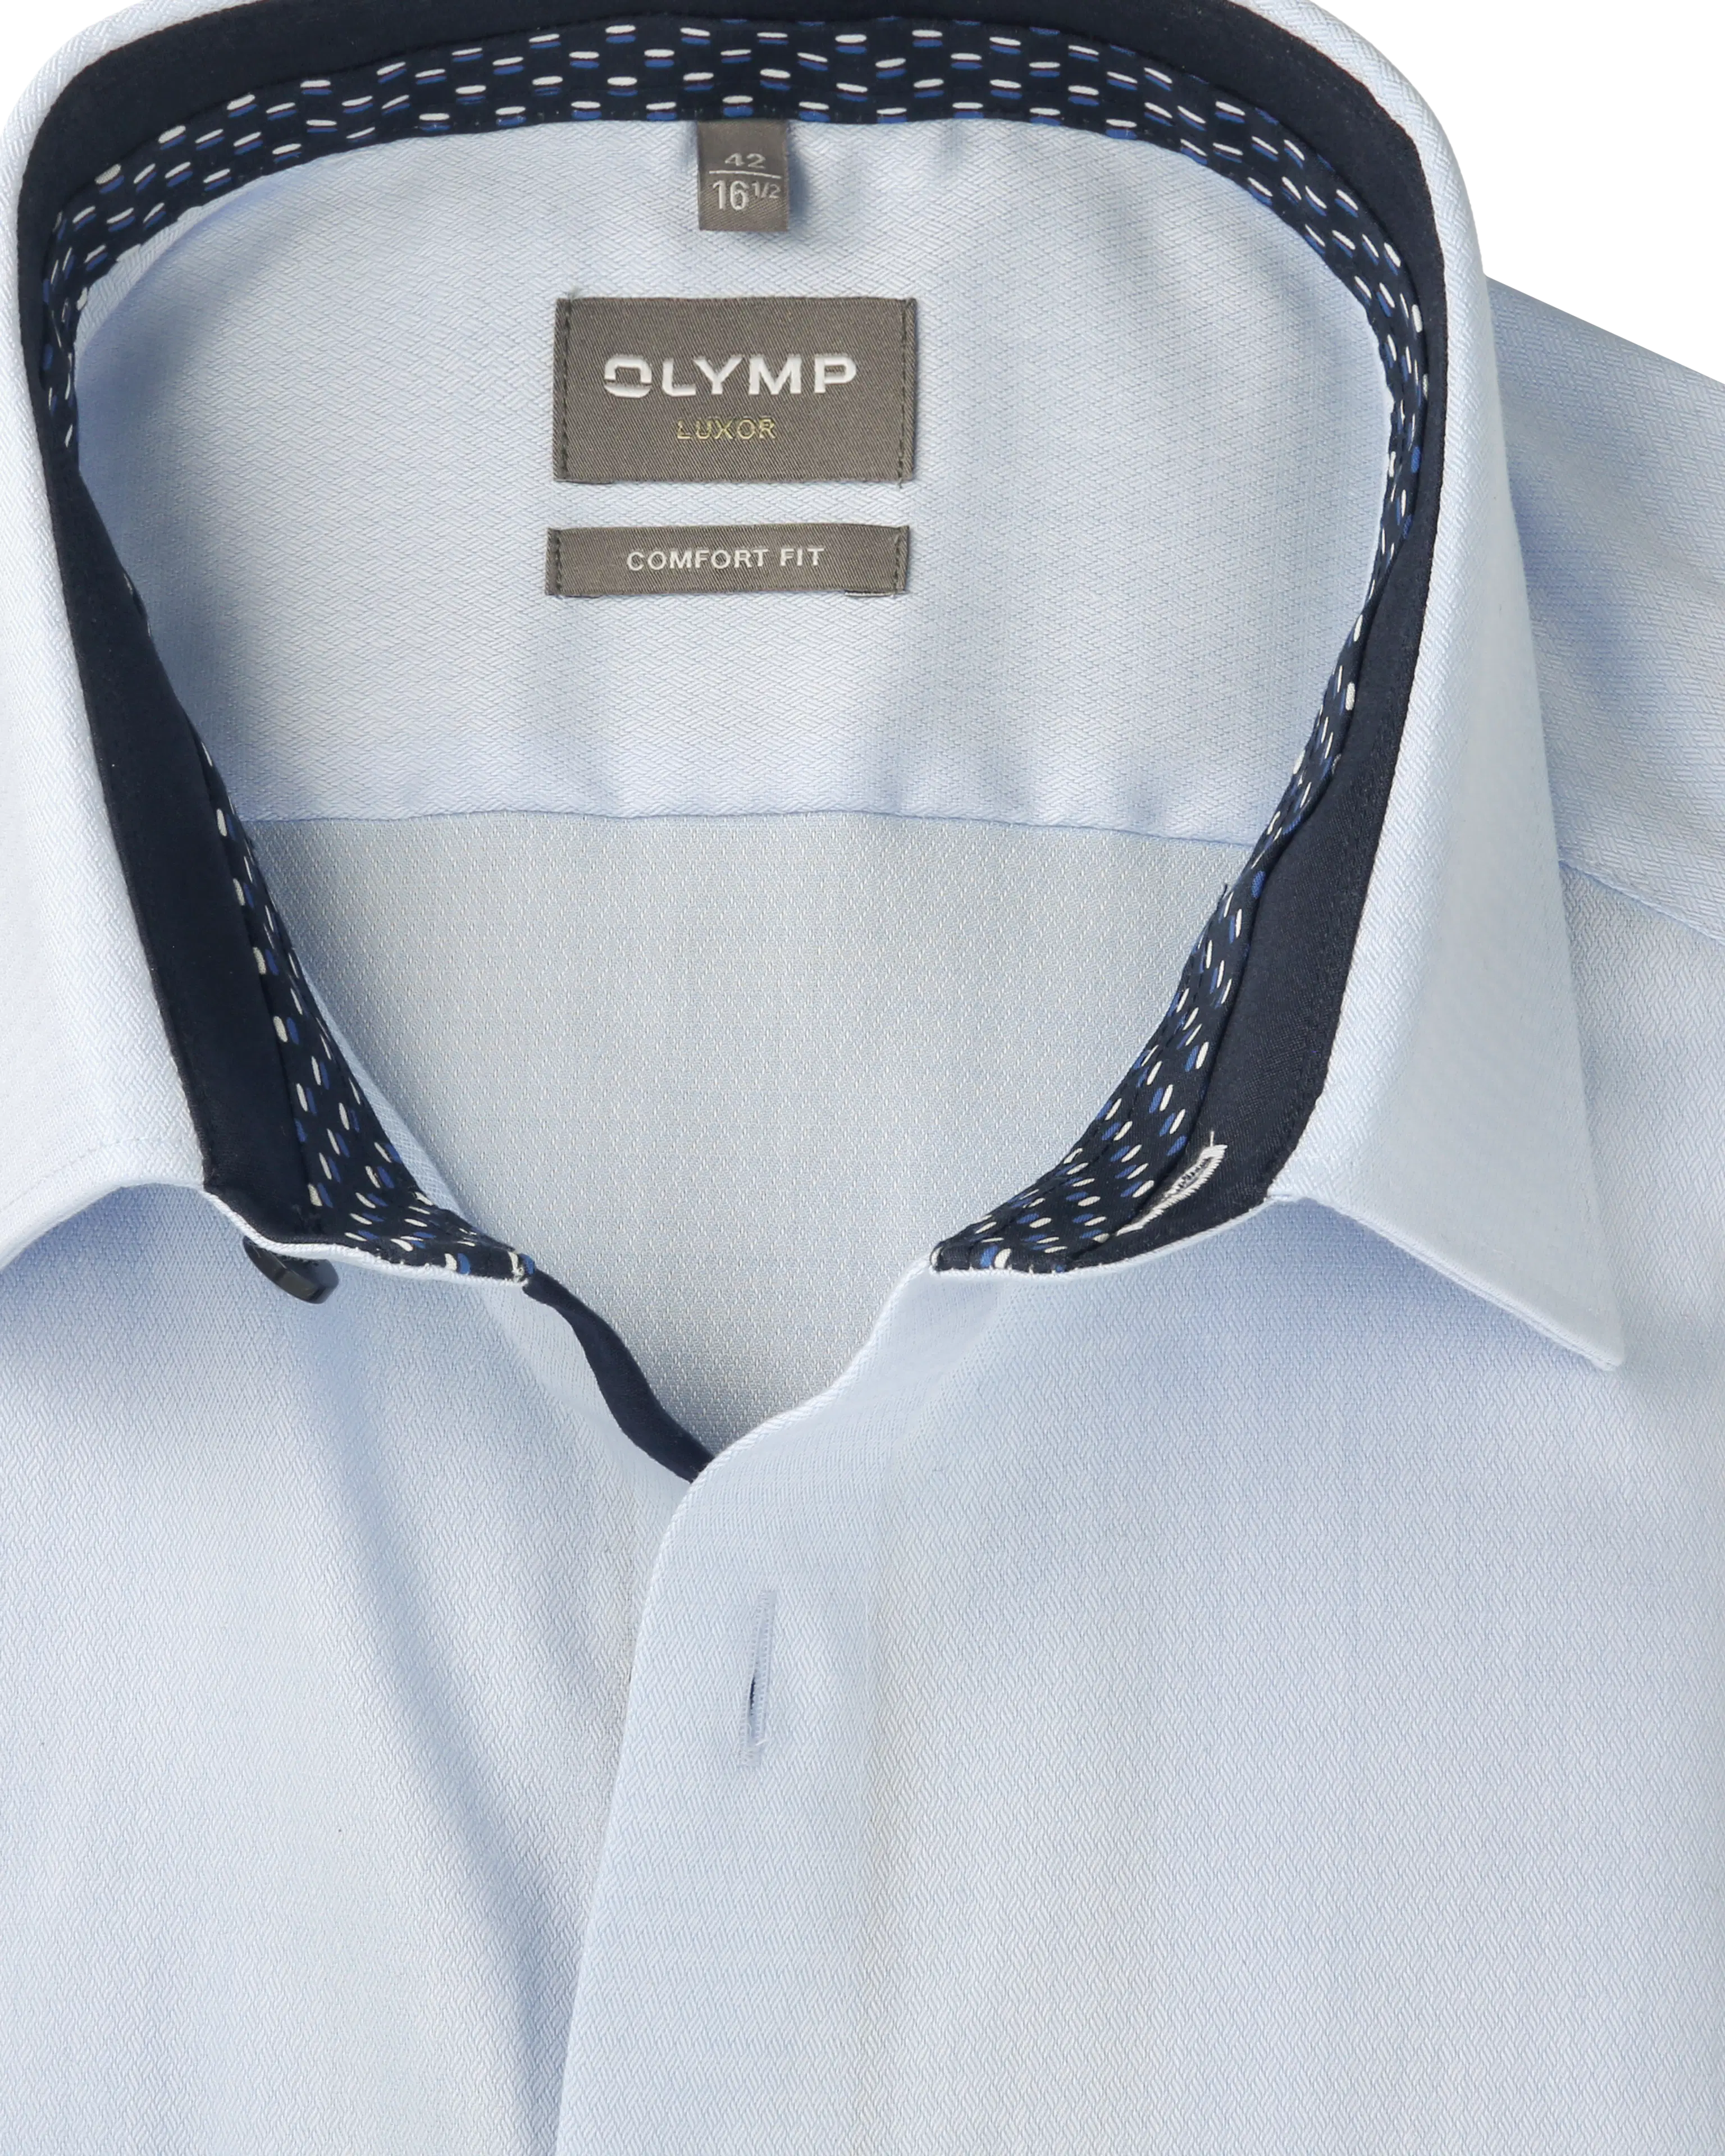 Olymp Luxor Comfort Fit kauluspaita